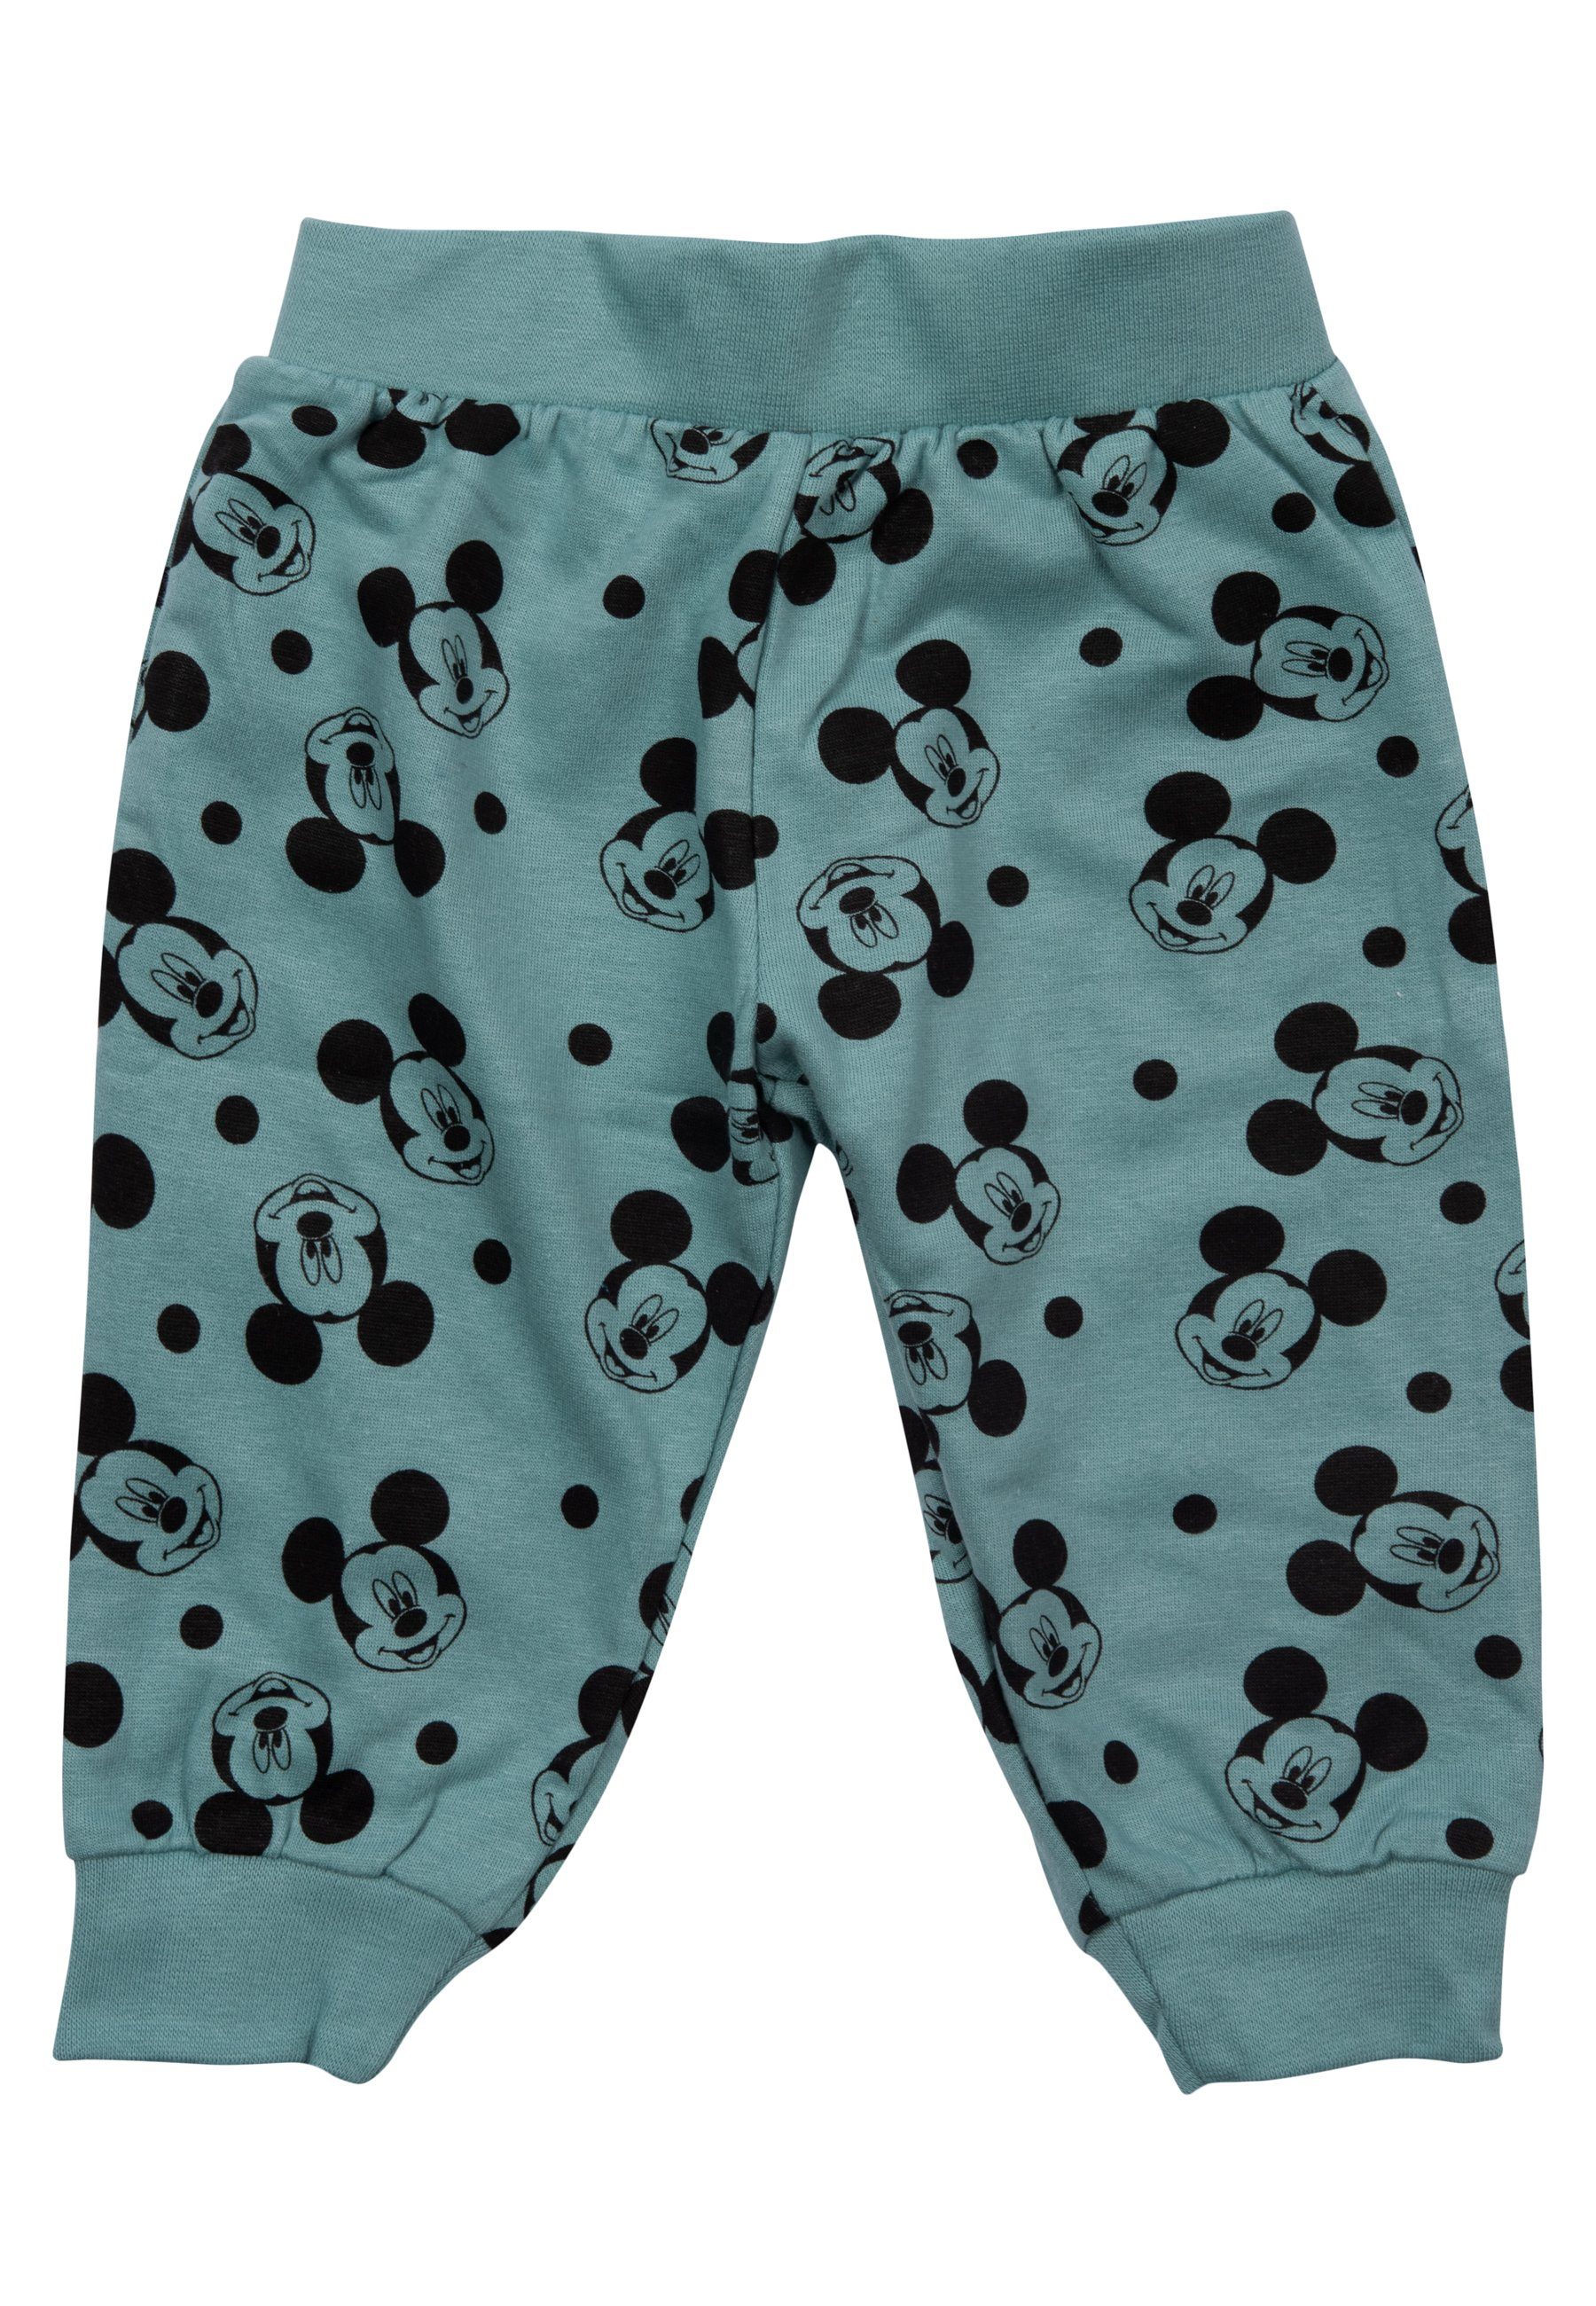 Hose Türkis Oberteil mit & Labels® Mouse Shirt Mickey Disney Set Baby Hose Pullover Grau United